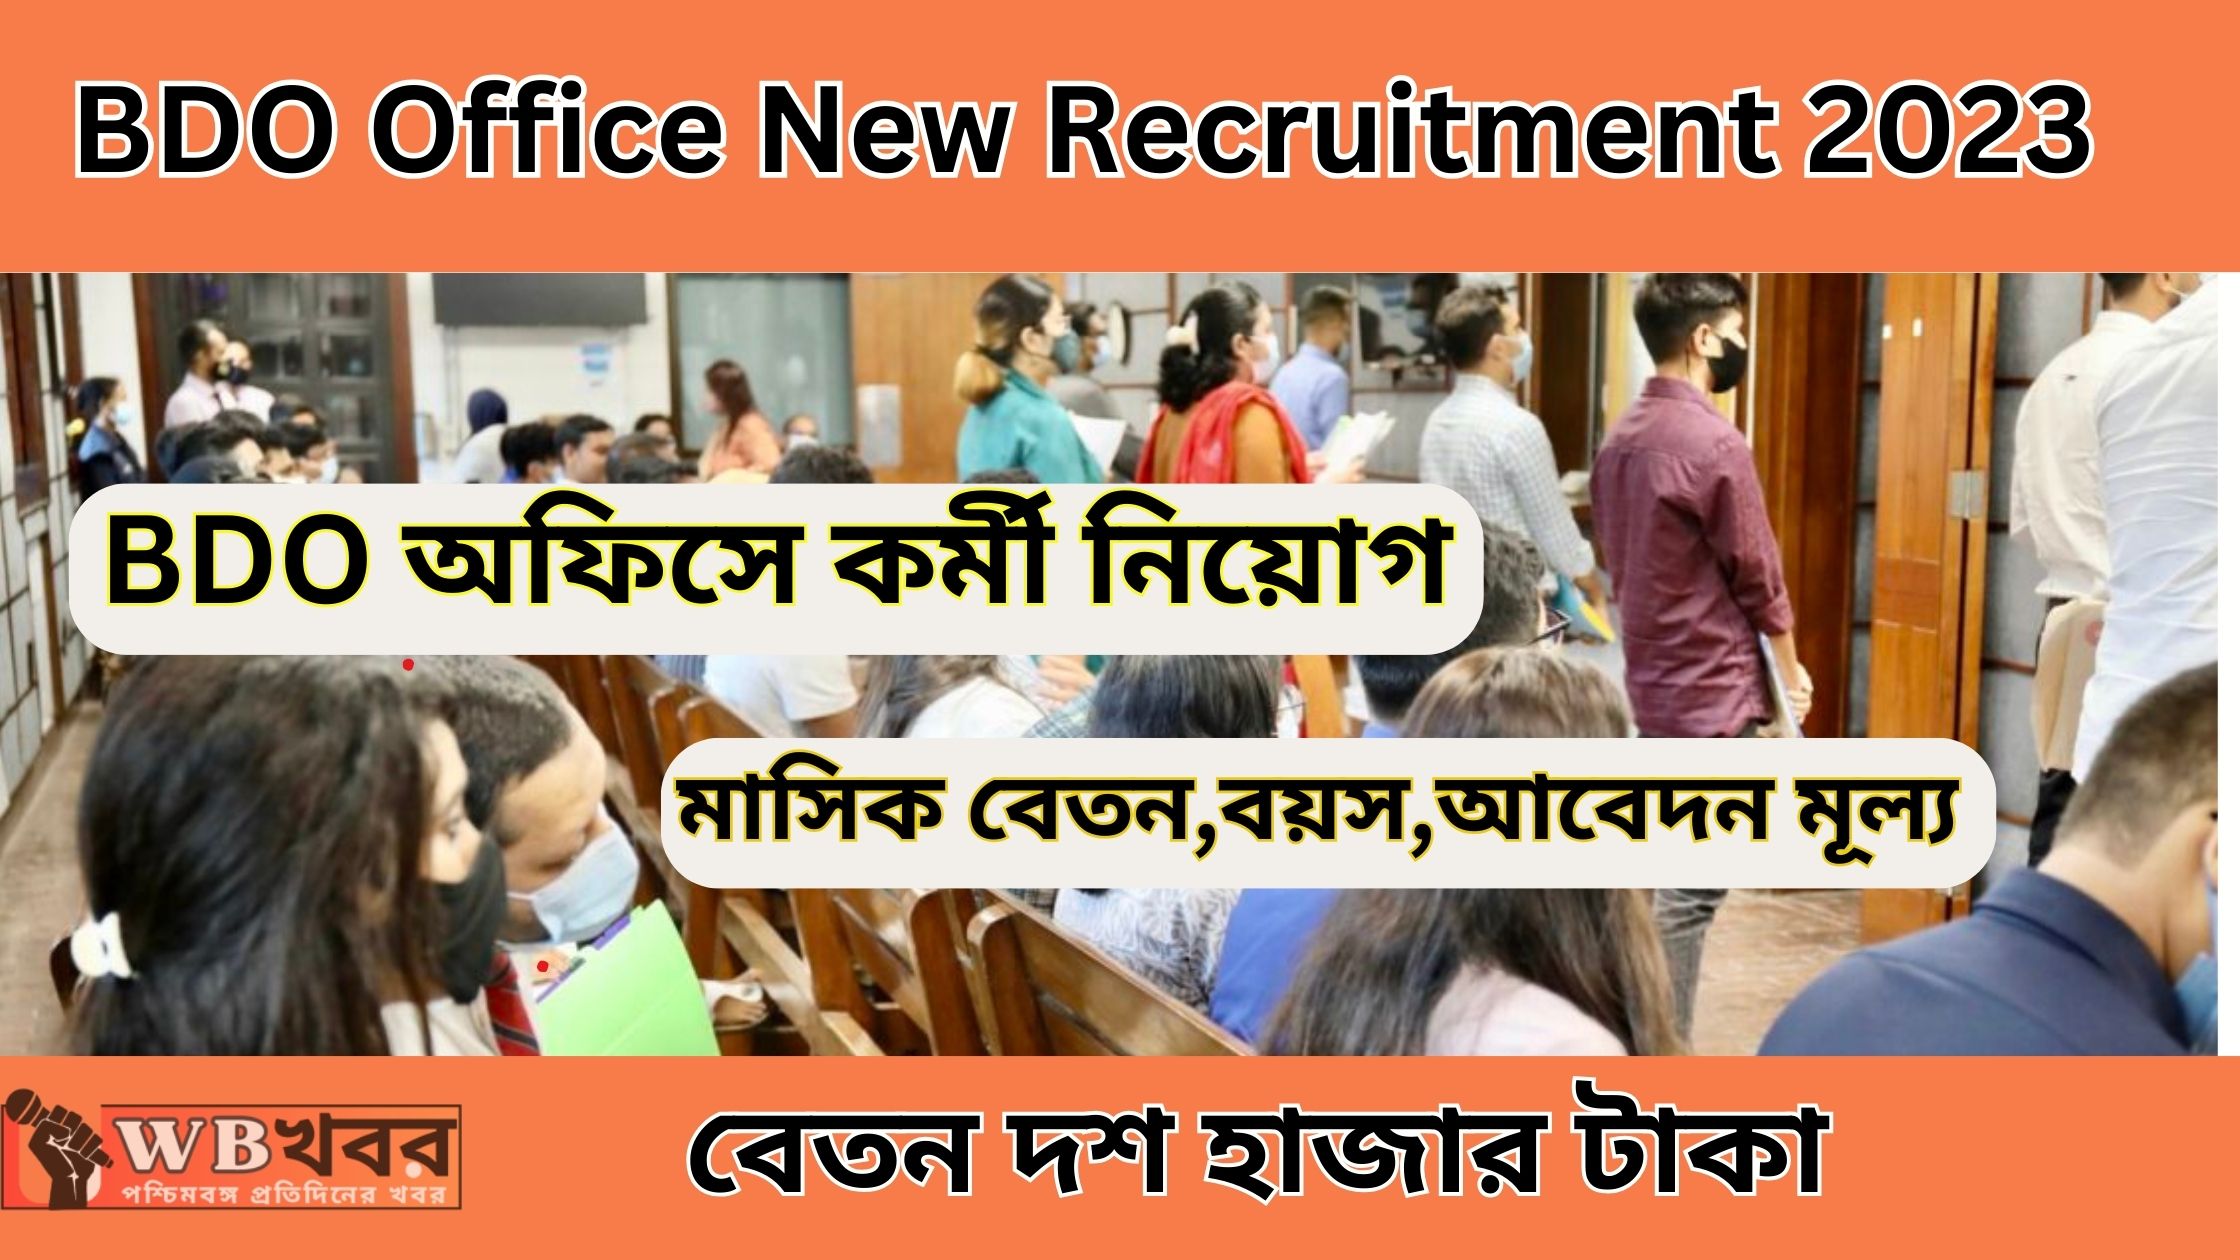 BDO অফিসে কর্মী নিয়োগ,বেতন দশ হাজার টাকা (BDO Office New Recruitment 2023)